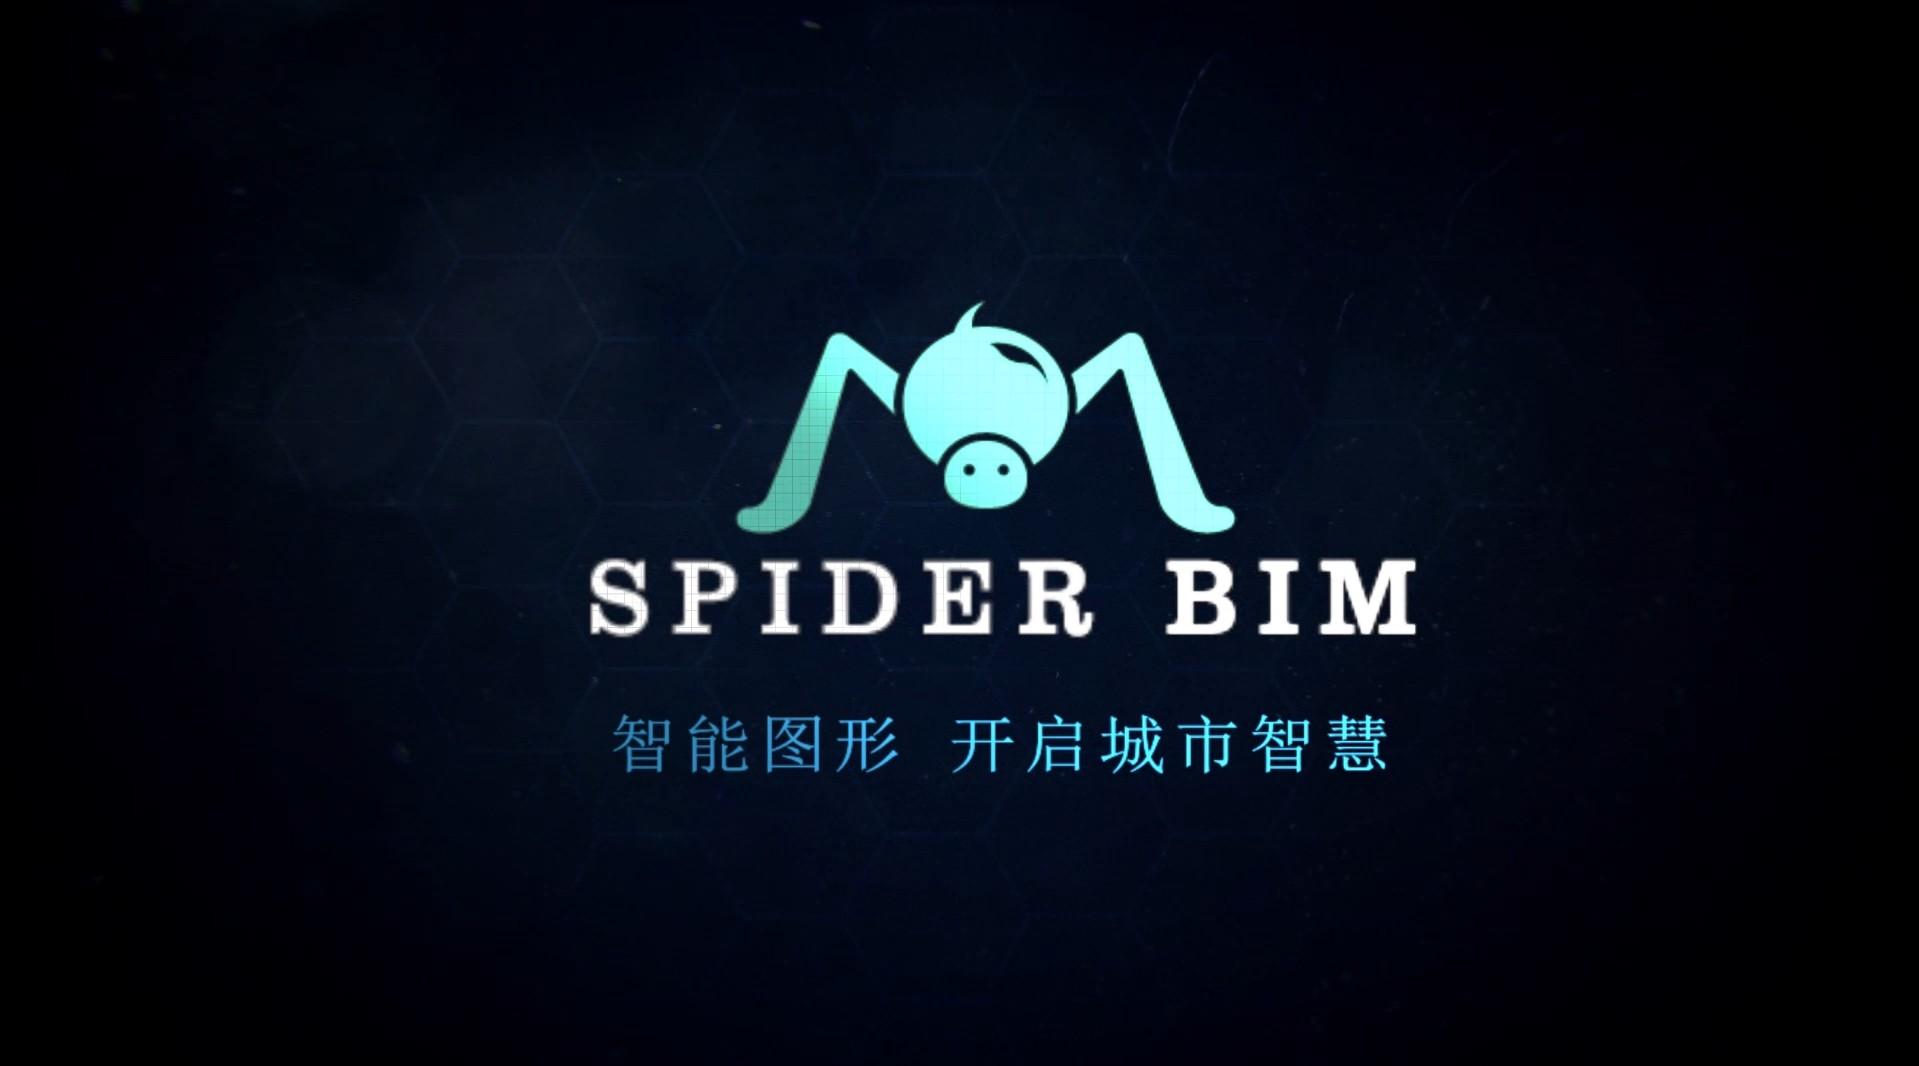 Spider BIM蜘蛛品牌形象篇